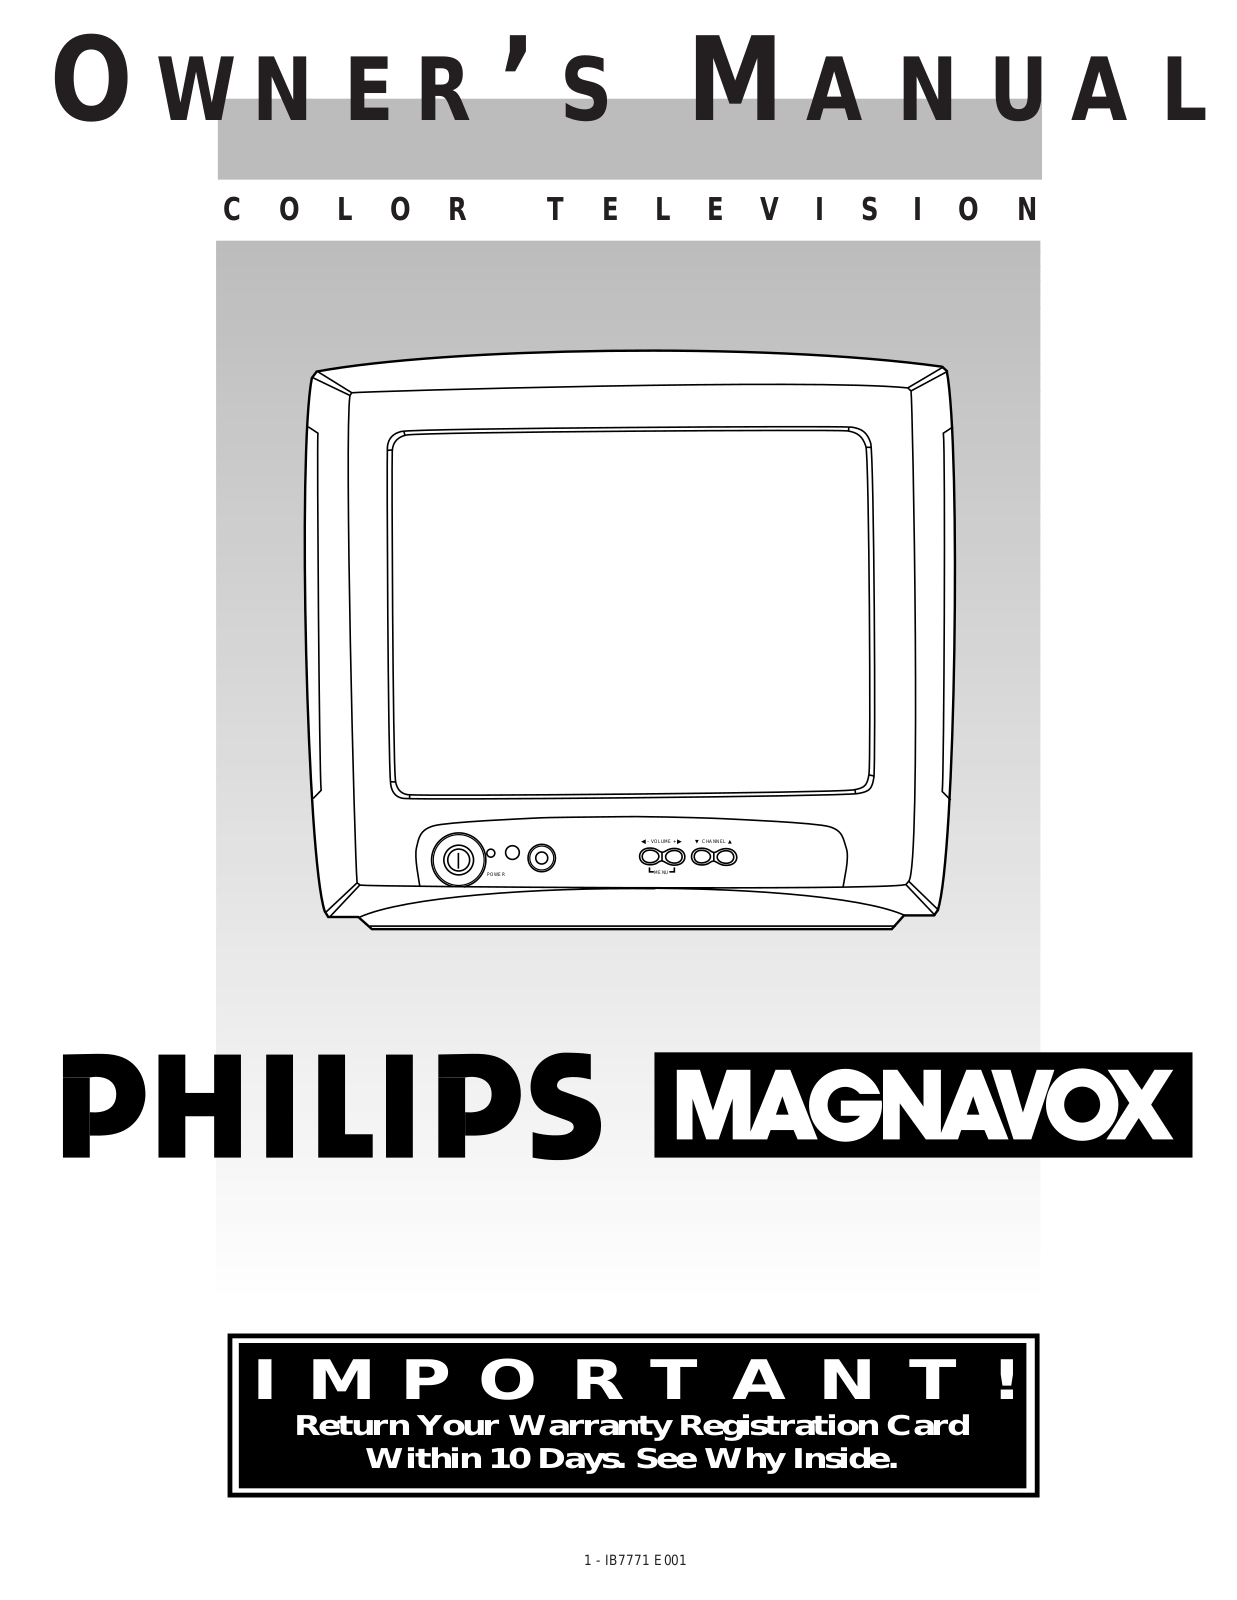 Philips 1-IB7771 E001, PR1389X User Manual